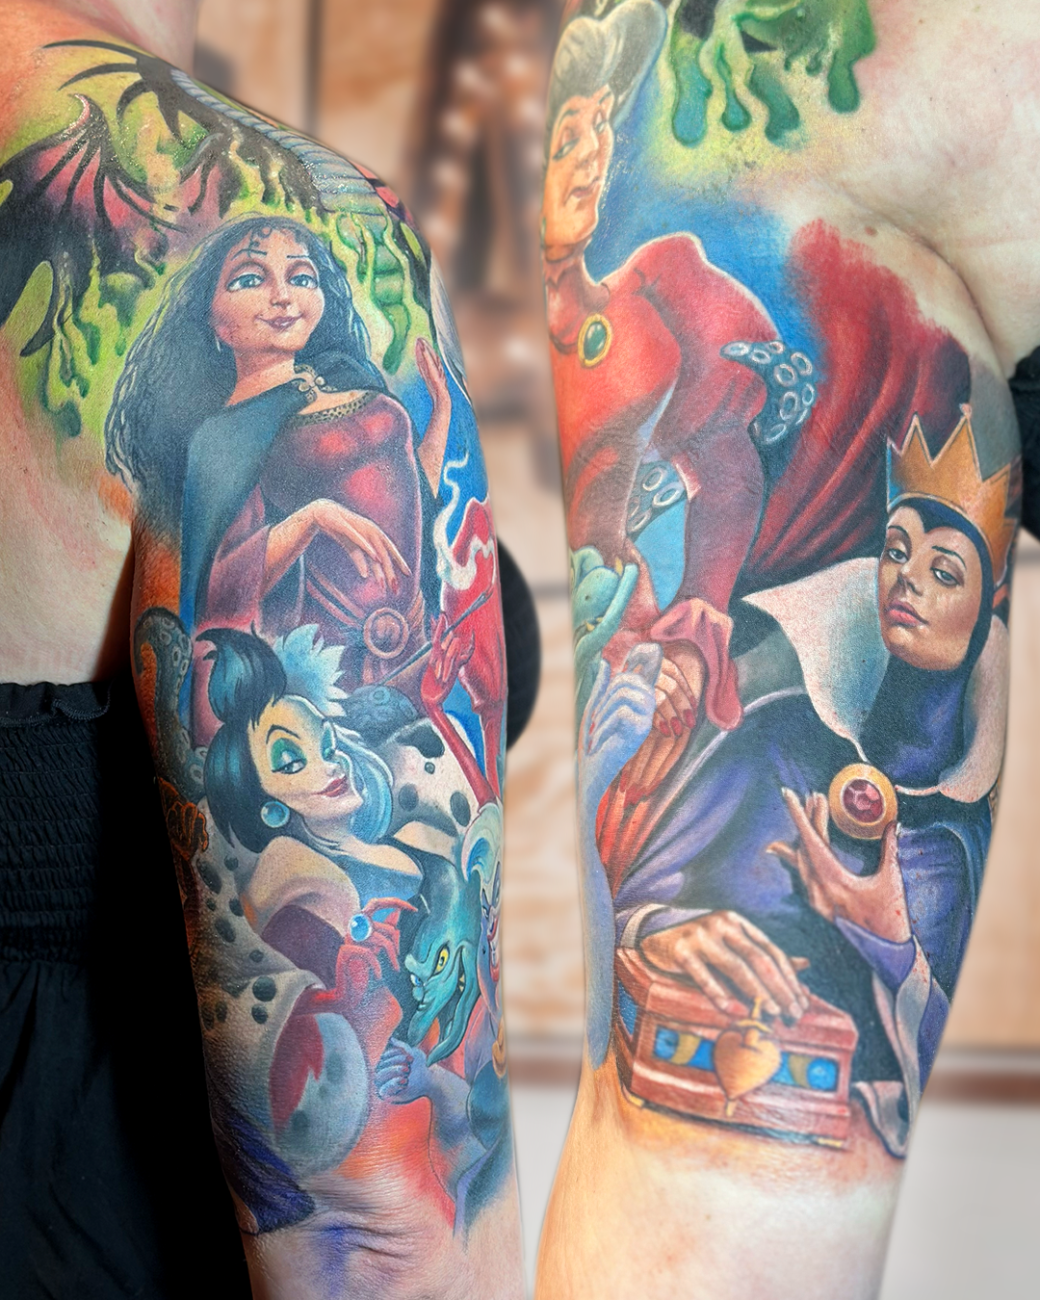 Start of a full Disney themed sleeve tattoo by TristanChallis on DeviantArt